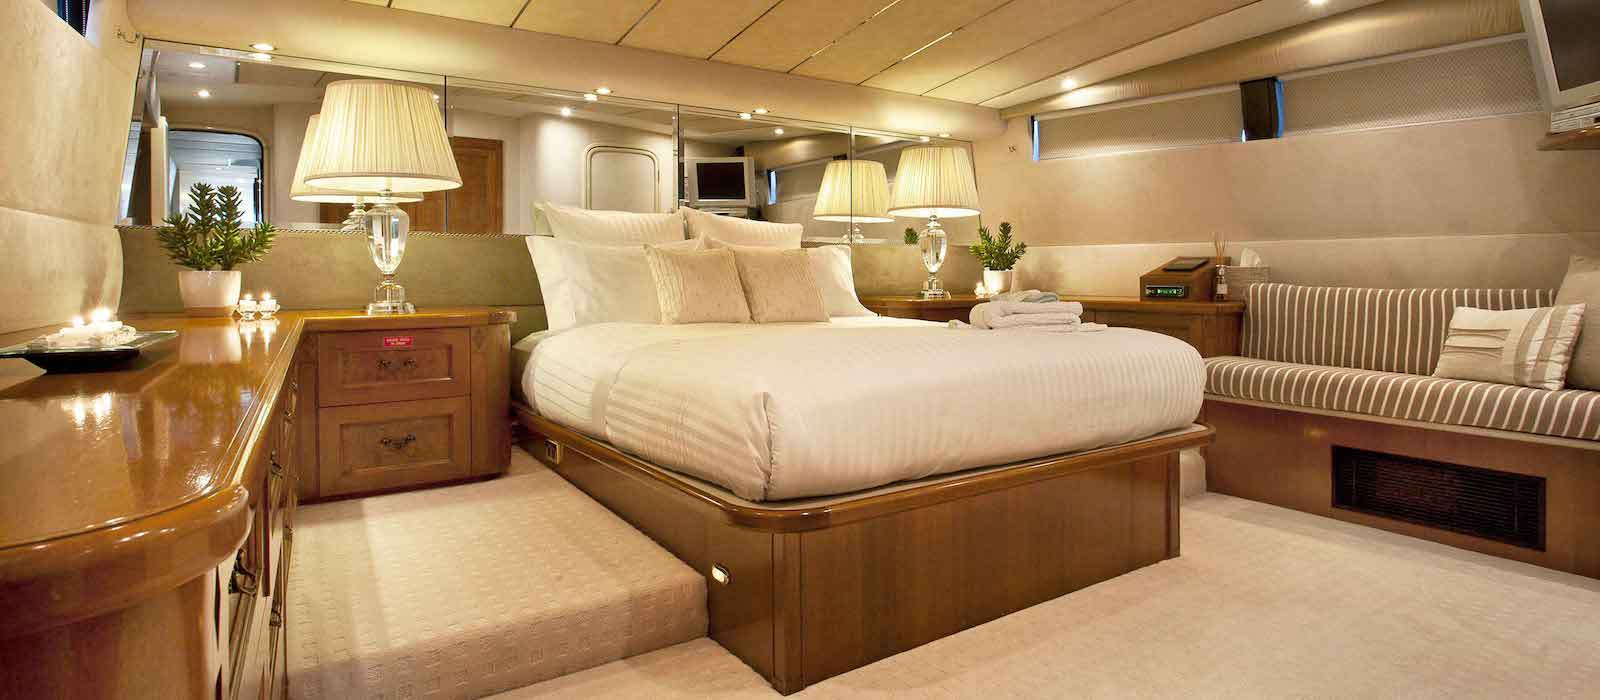 Master cabin on Oscar II superyacht hire